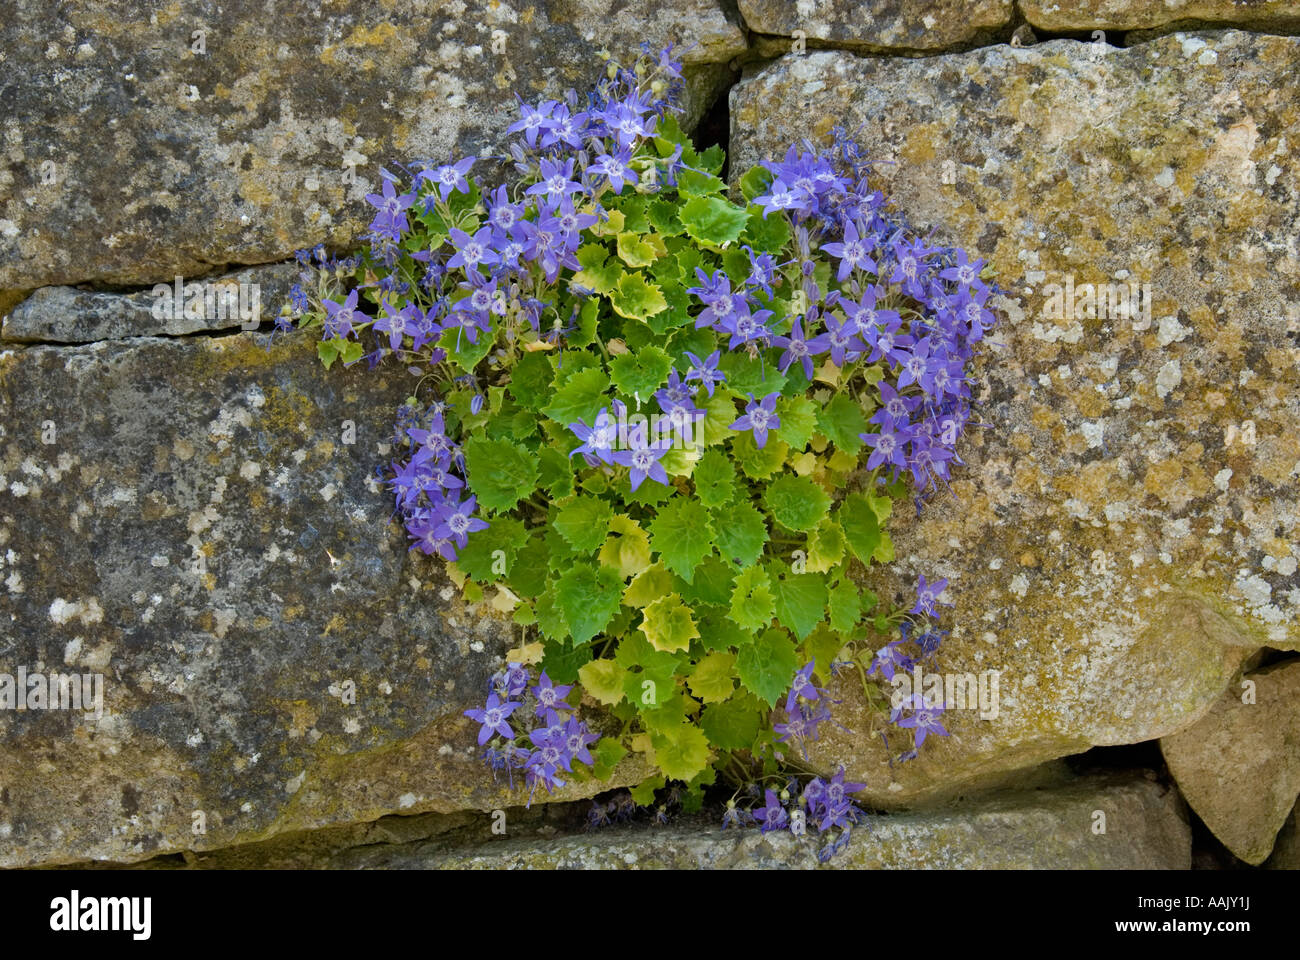 Adriatic Bellflower (Campanula garganica) growingin crevice on wall Stock Photo